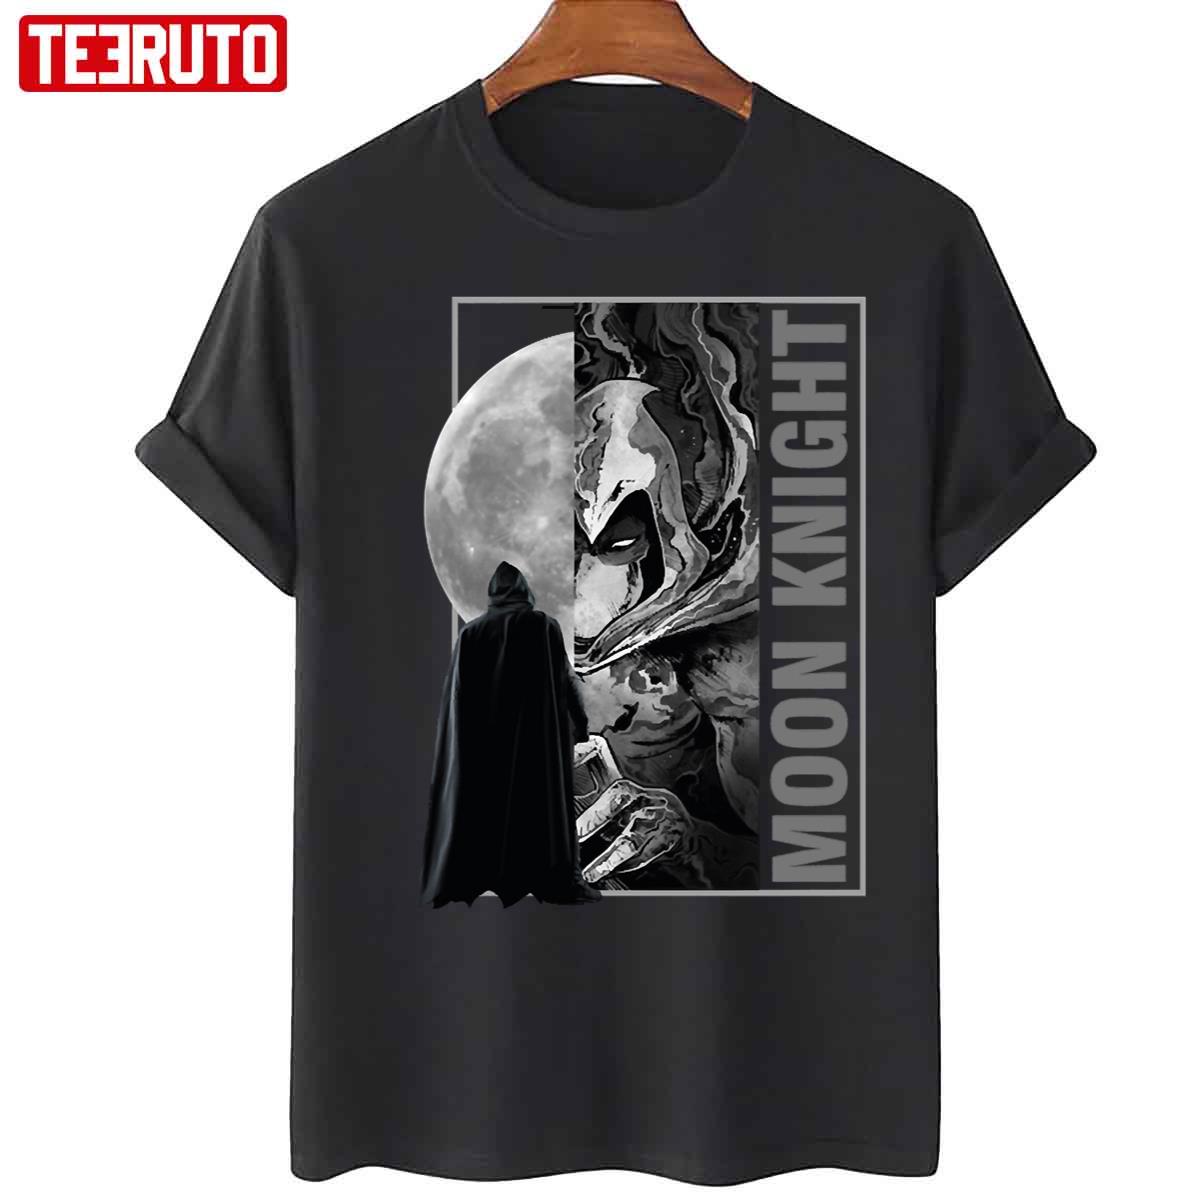 The Moon Knight Unisex T-Shirt